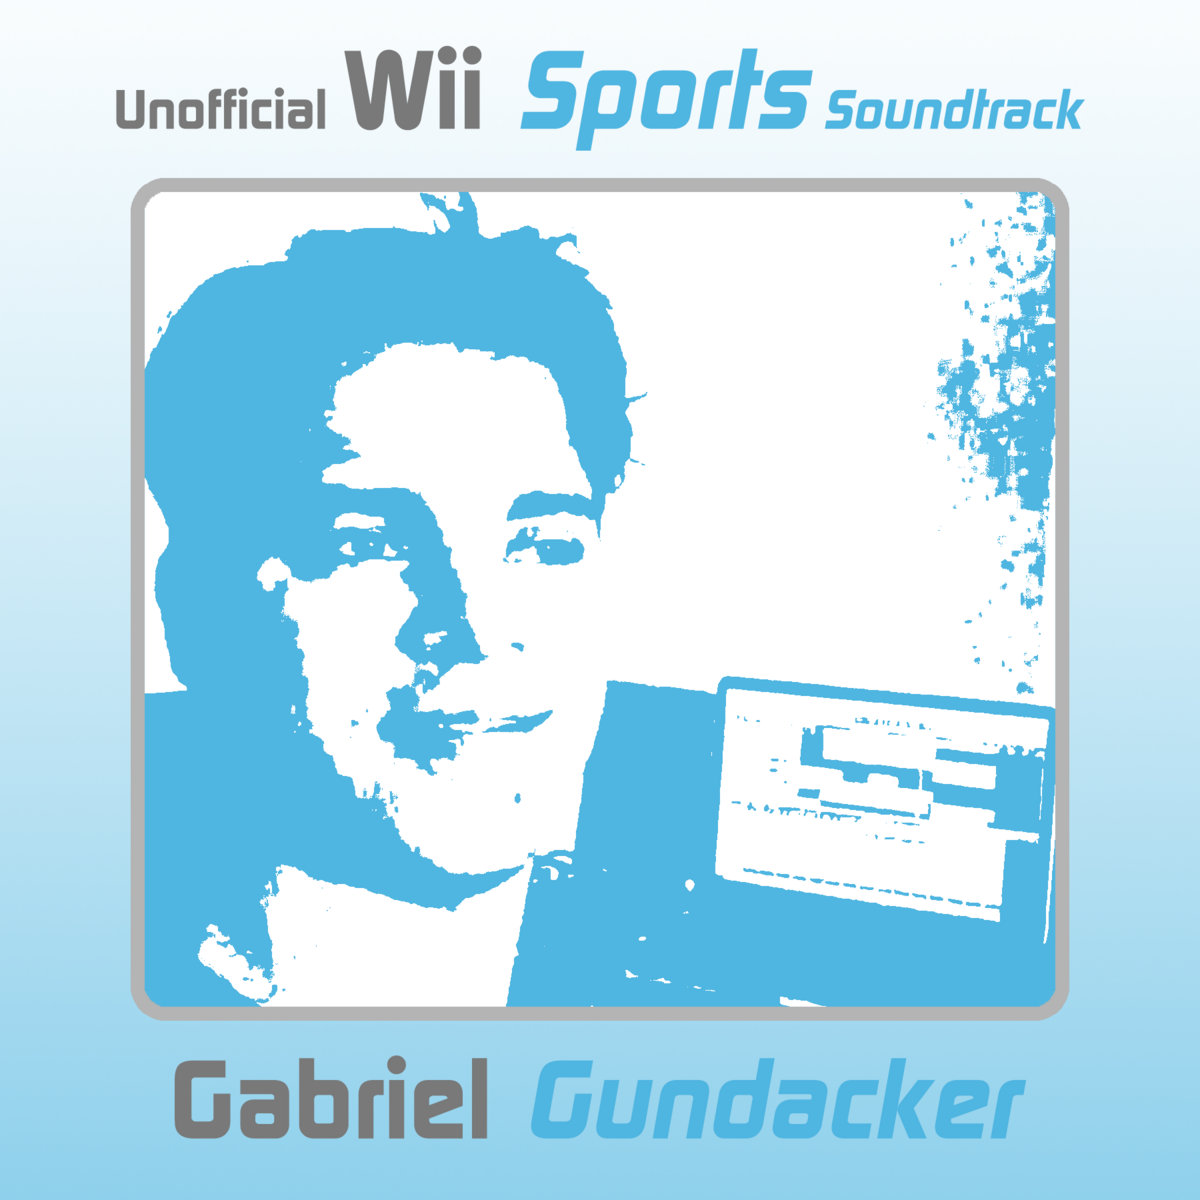 Wii Sports Theme Tune